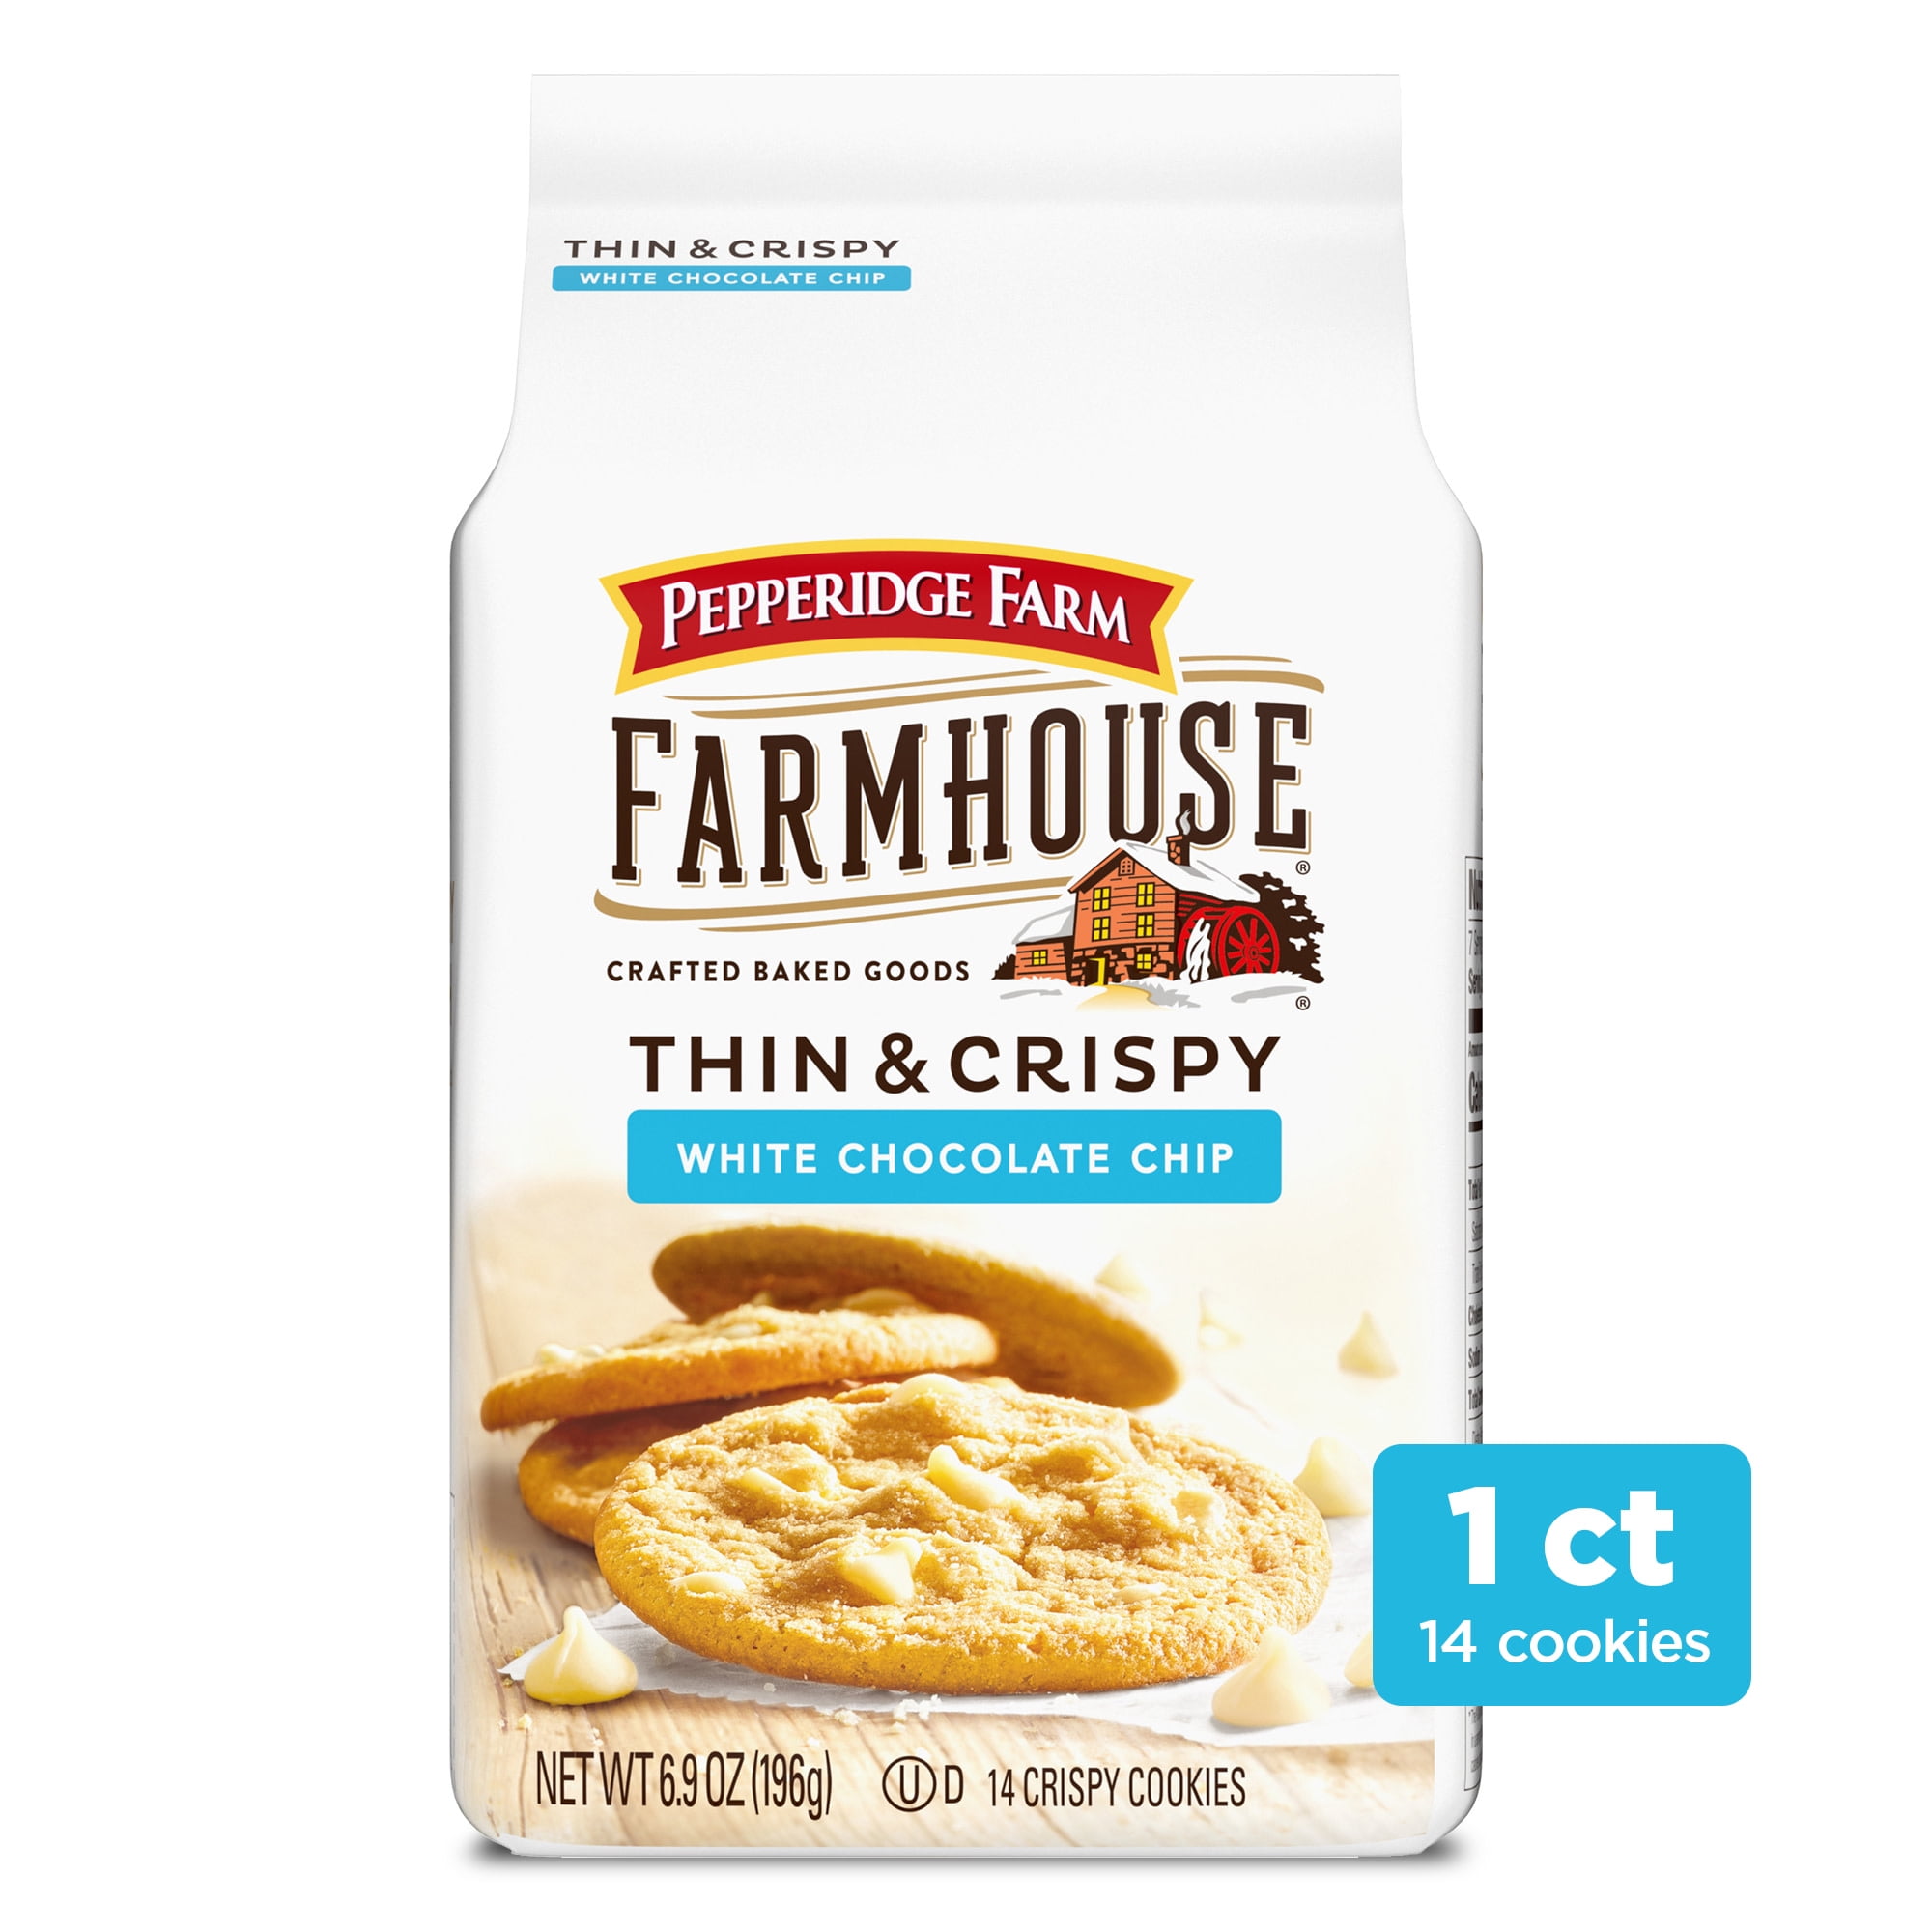 Pepperidge Farm Farmhouse Thin & Crispy White Chocolate Chip Cookies, 6.9 Oz Bag